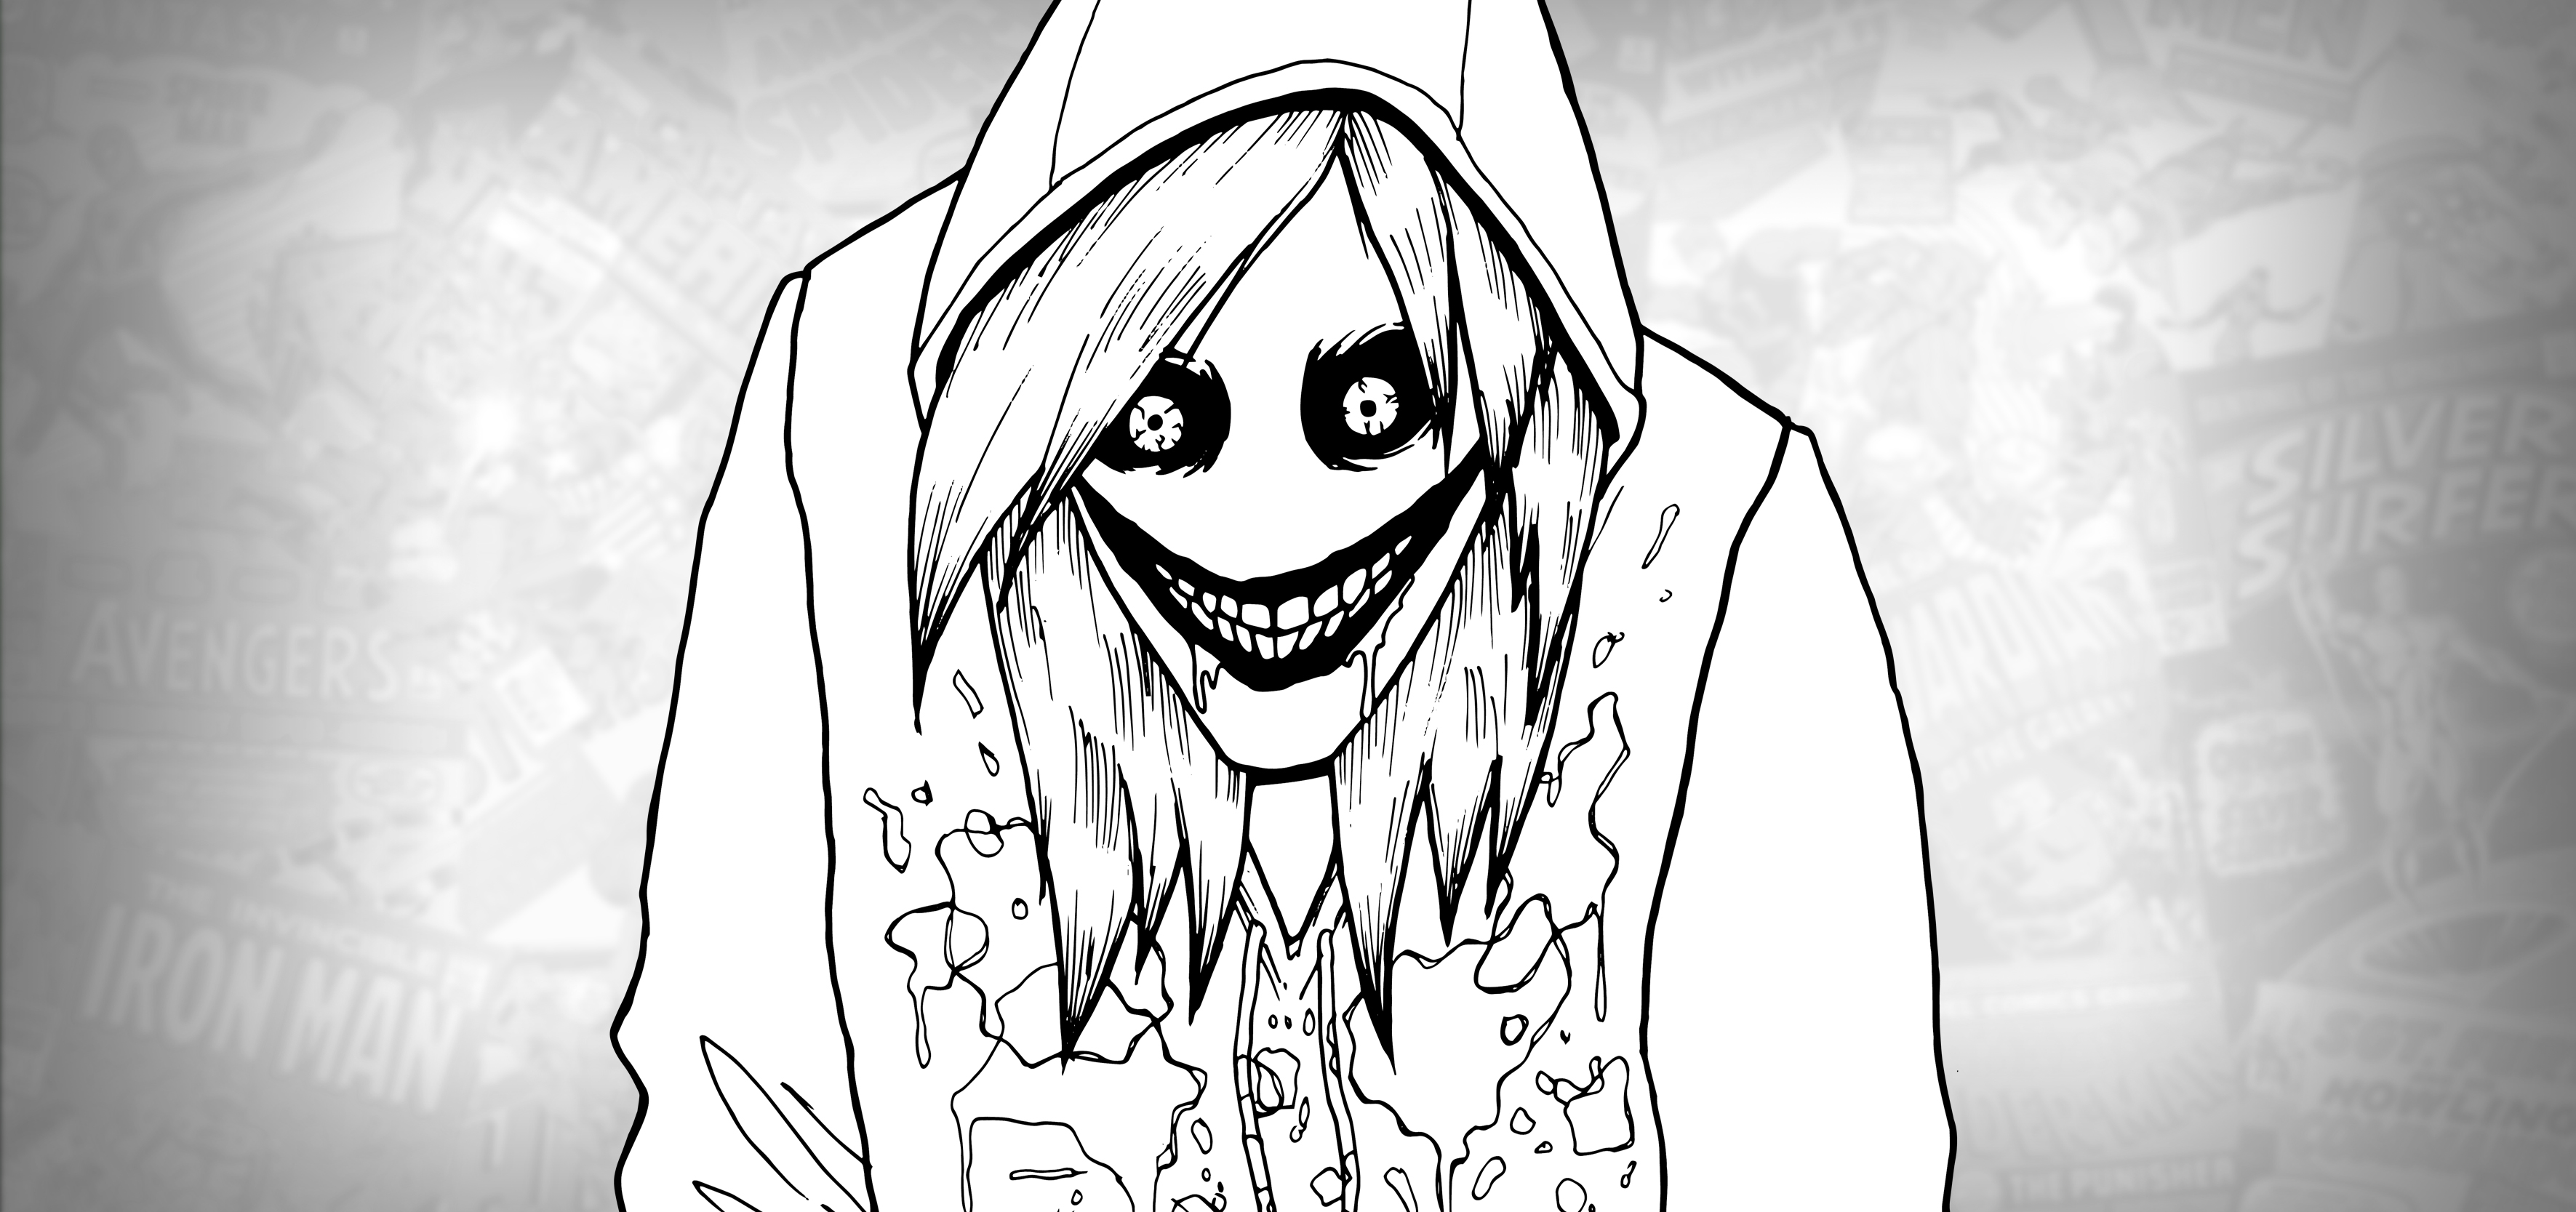 How to draw jeff the killer creepypasta drawing tutorial